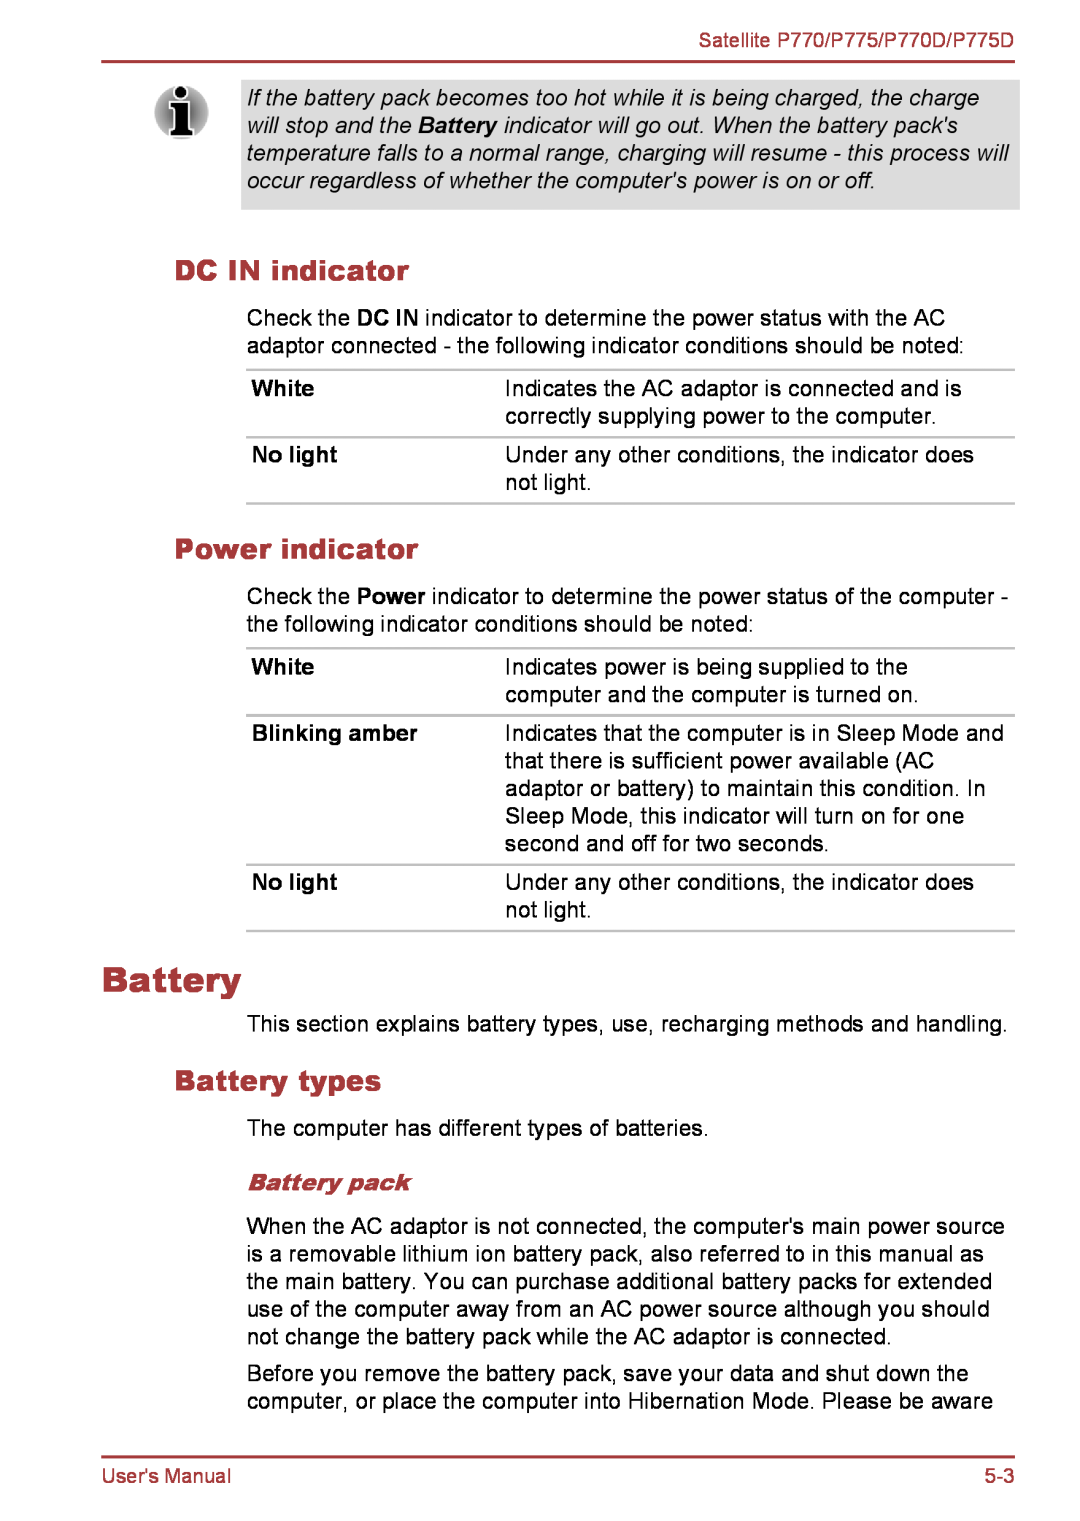 Toshiba P770 user manual DC IN indicator, Power indicator, Battery types, Blinking amber, Battery pack, White, No light 